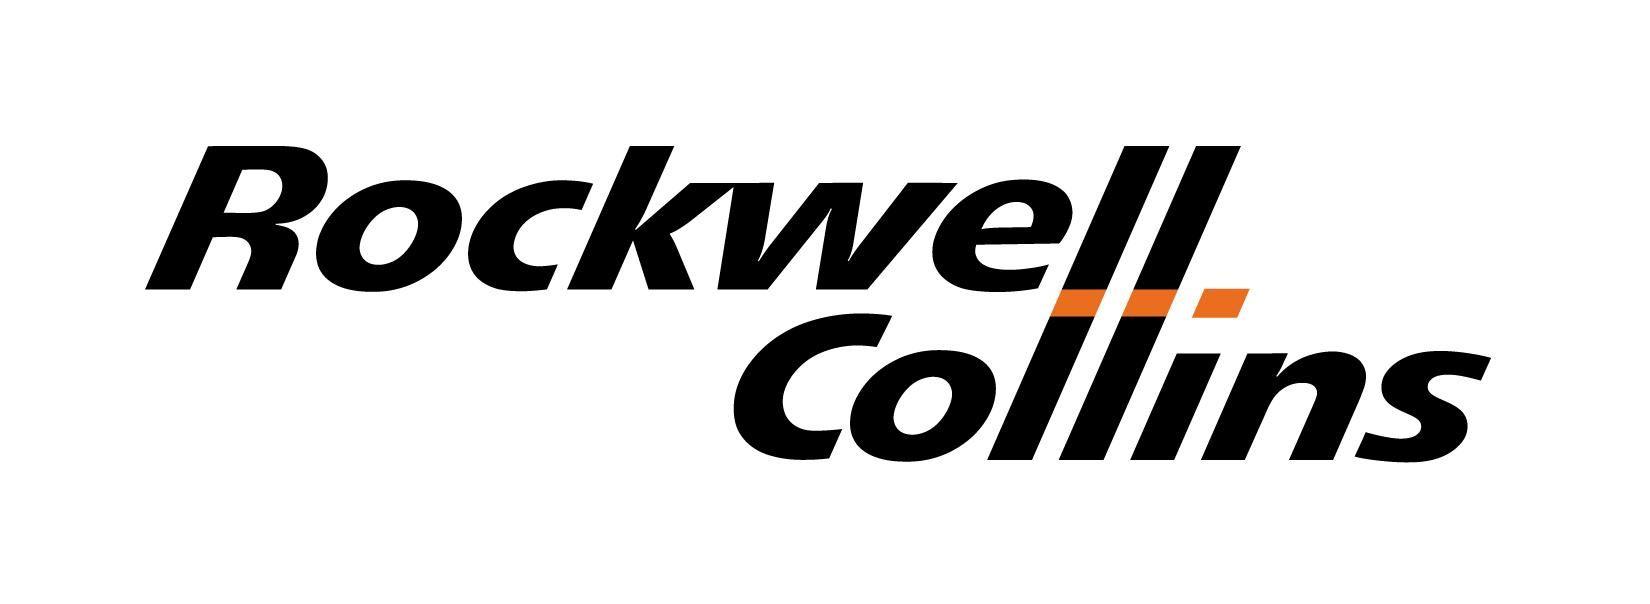 Collins Logo - Rockwell Collins Logo Files — Central Florida Robotics